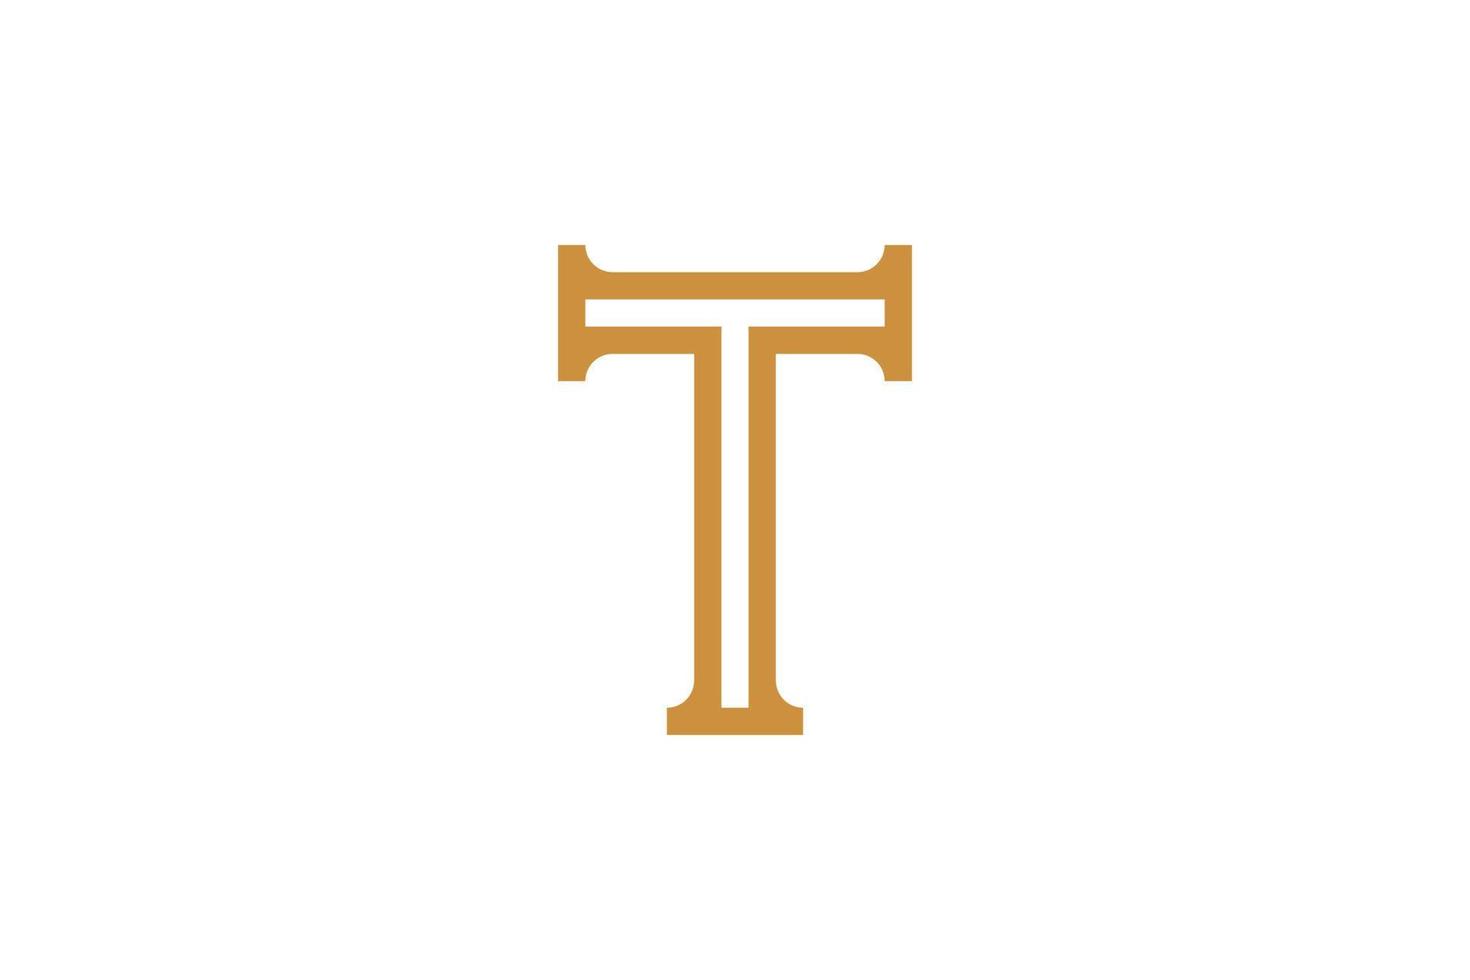 design de logotipo monoline letra t vetor